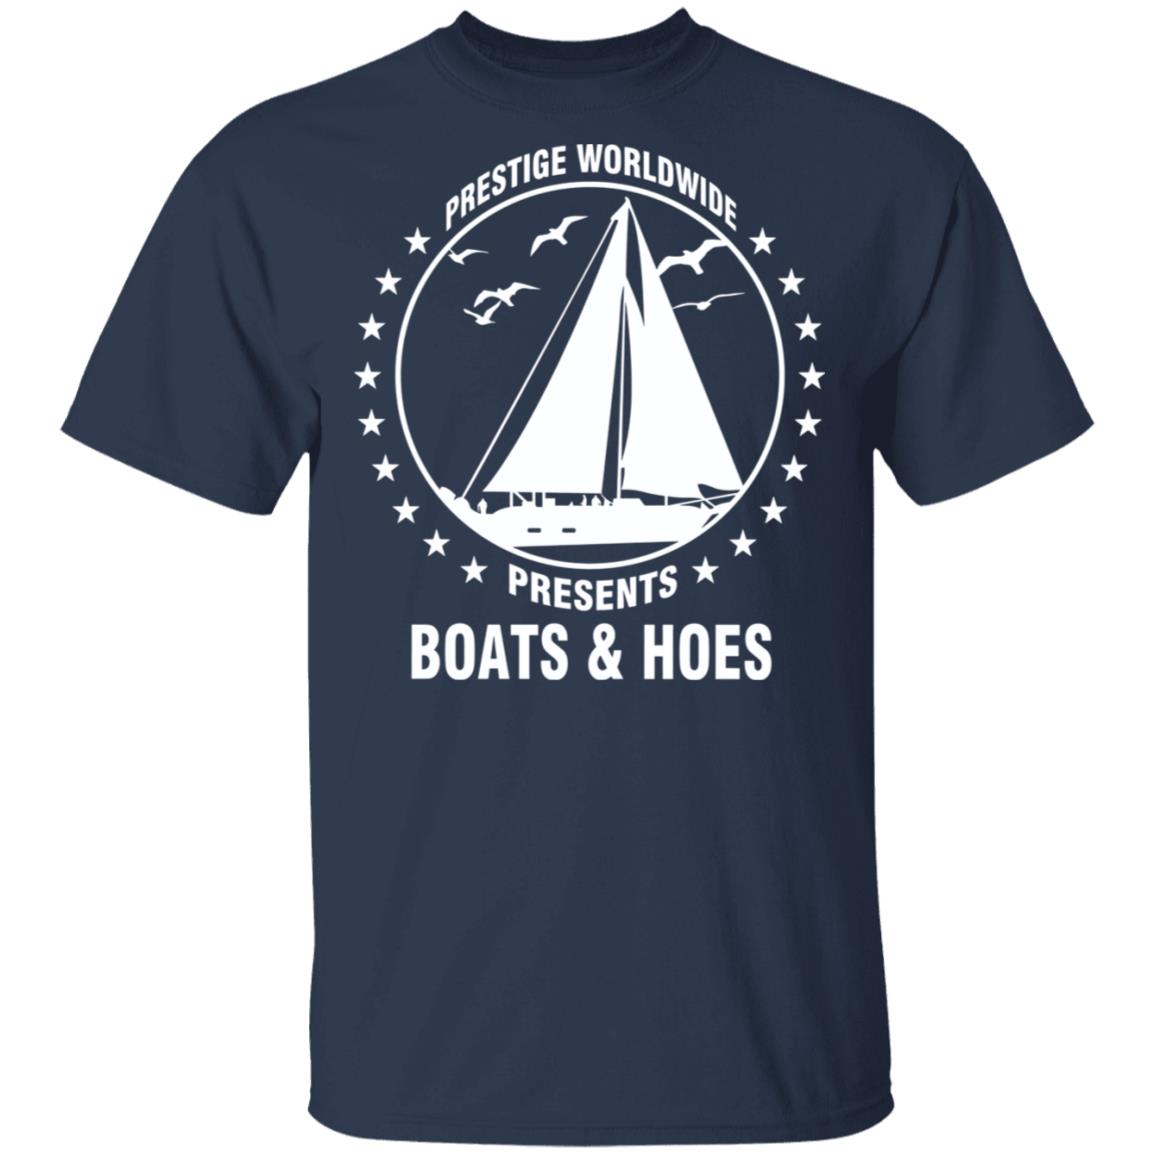 Prestige Worldwide Presents Boats and Hoes shirt - Rockatee